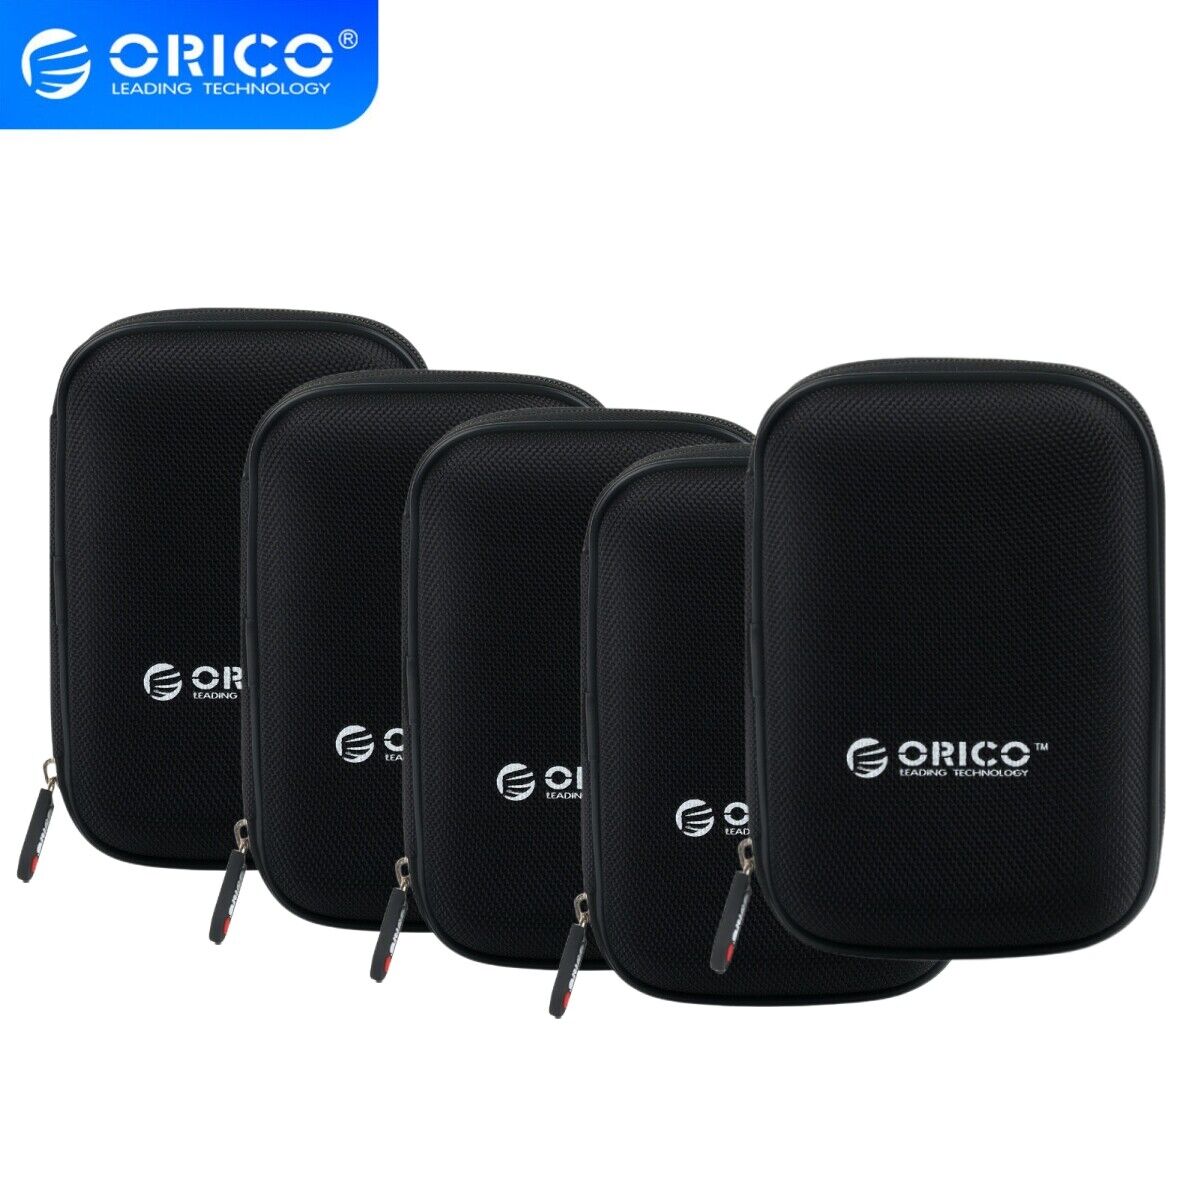 ORICO Portable Hard Drive Case 2.5inch External Drive Storage Carry Bag 5pcs/lot